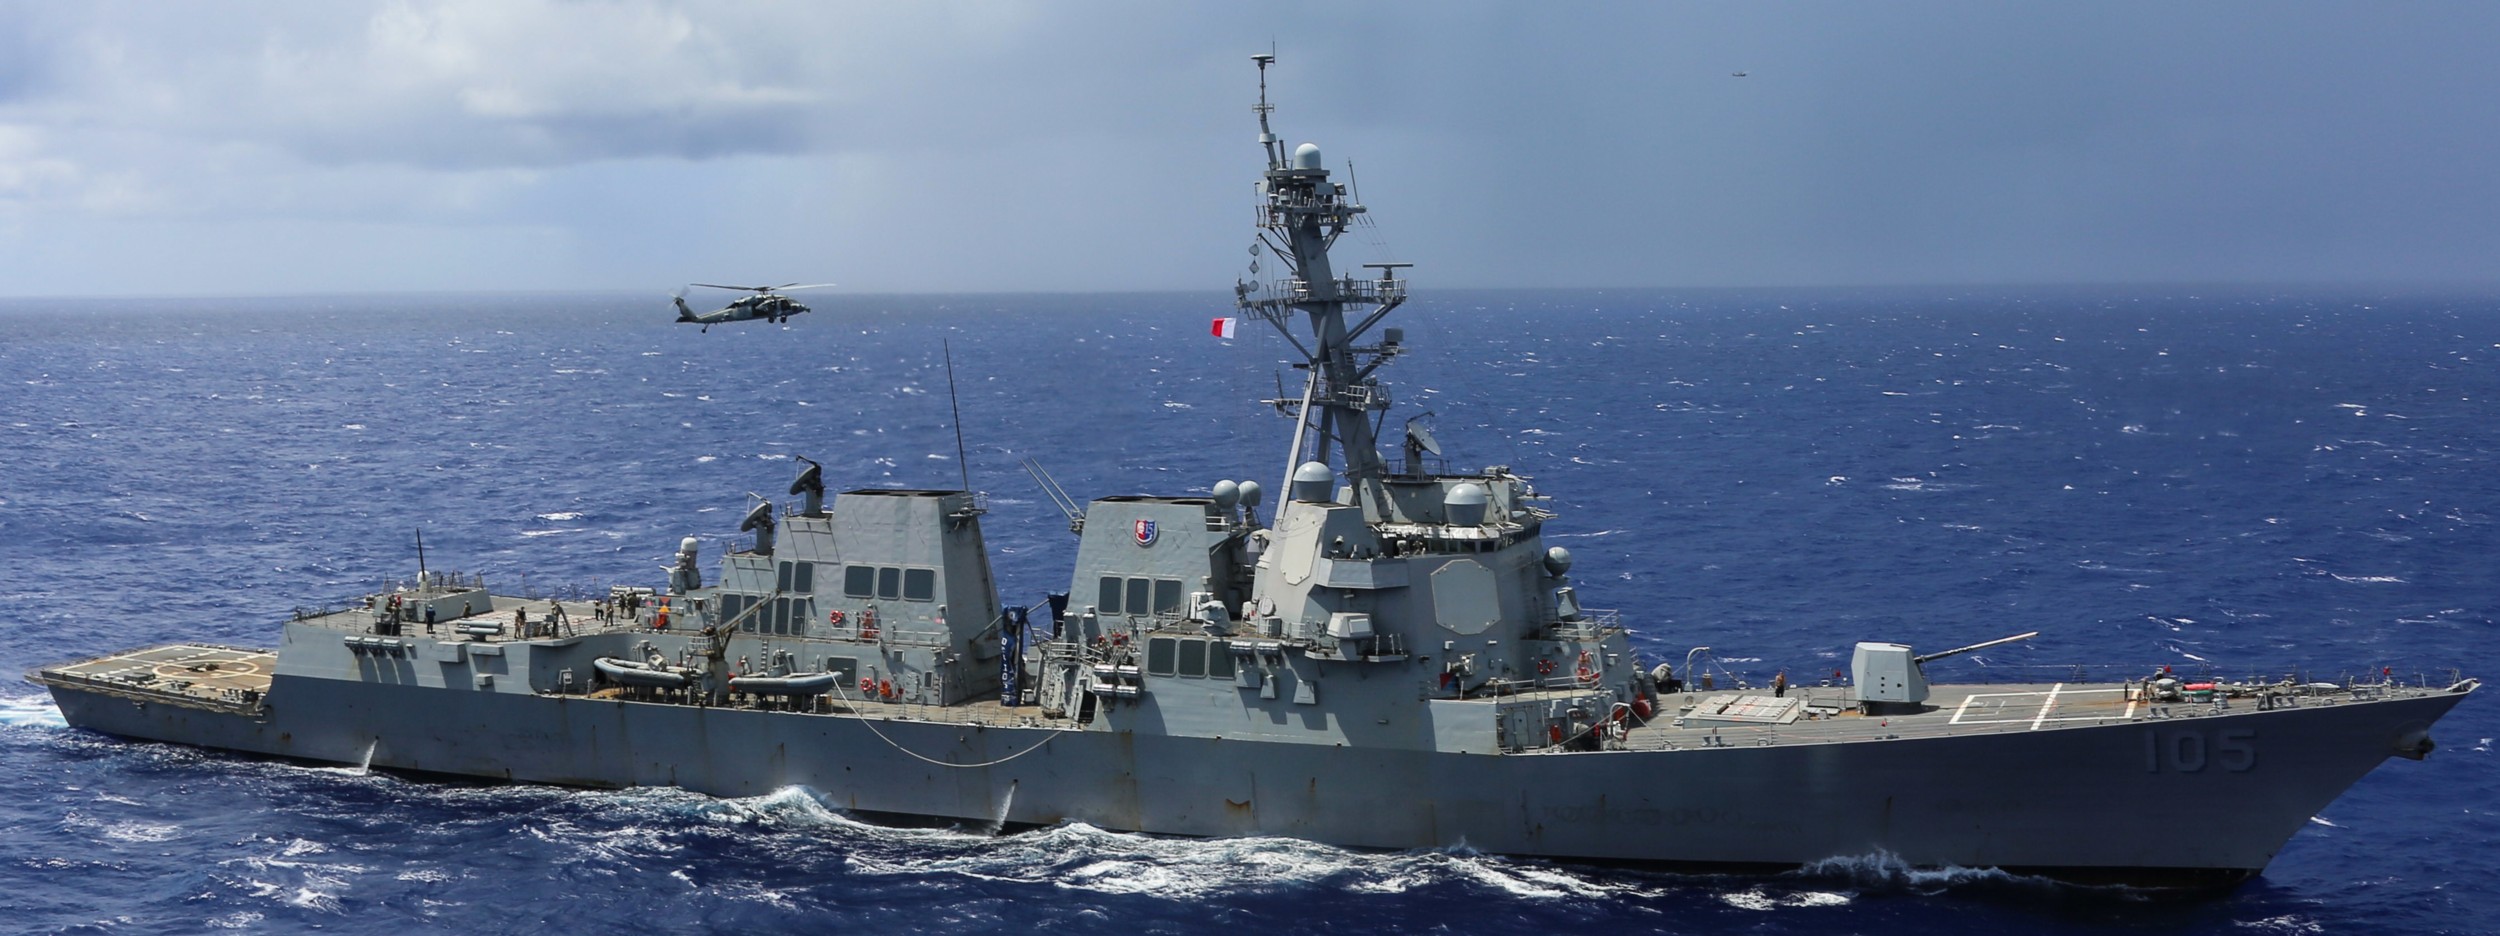 ddg-110 uss dewey arleigh burke class guided missile destroyer aegis us navy philippine sea 133